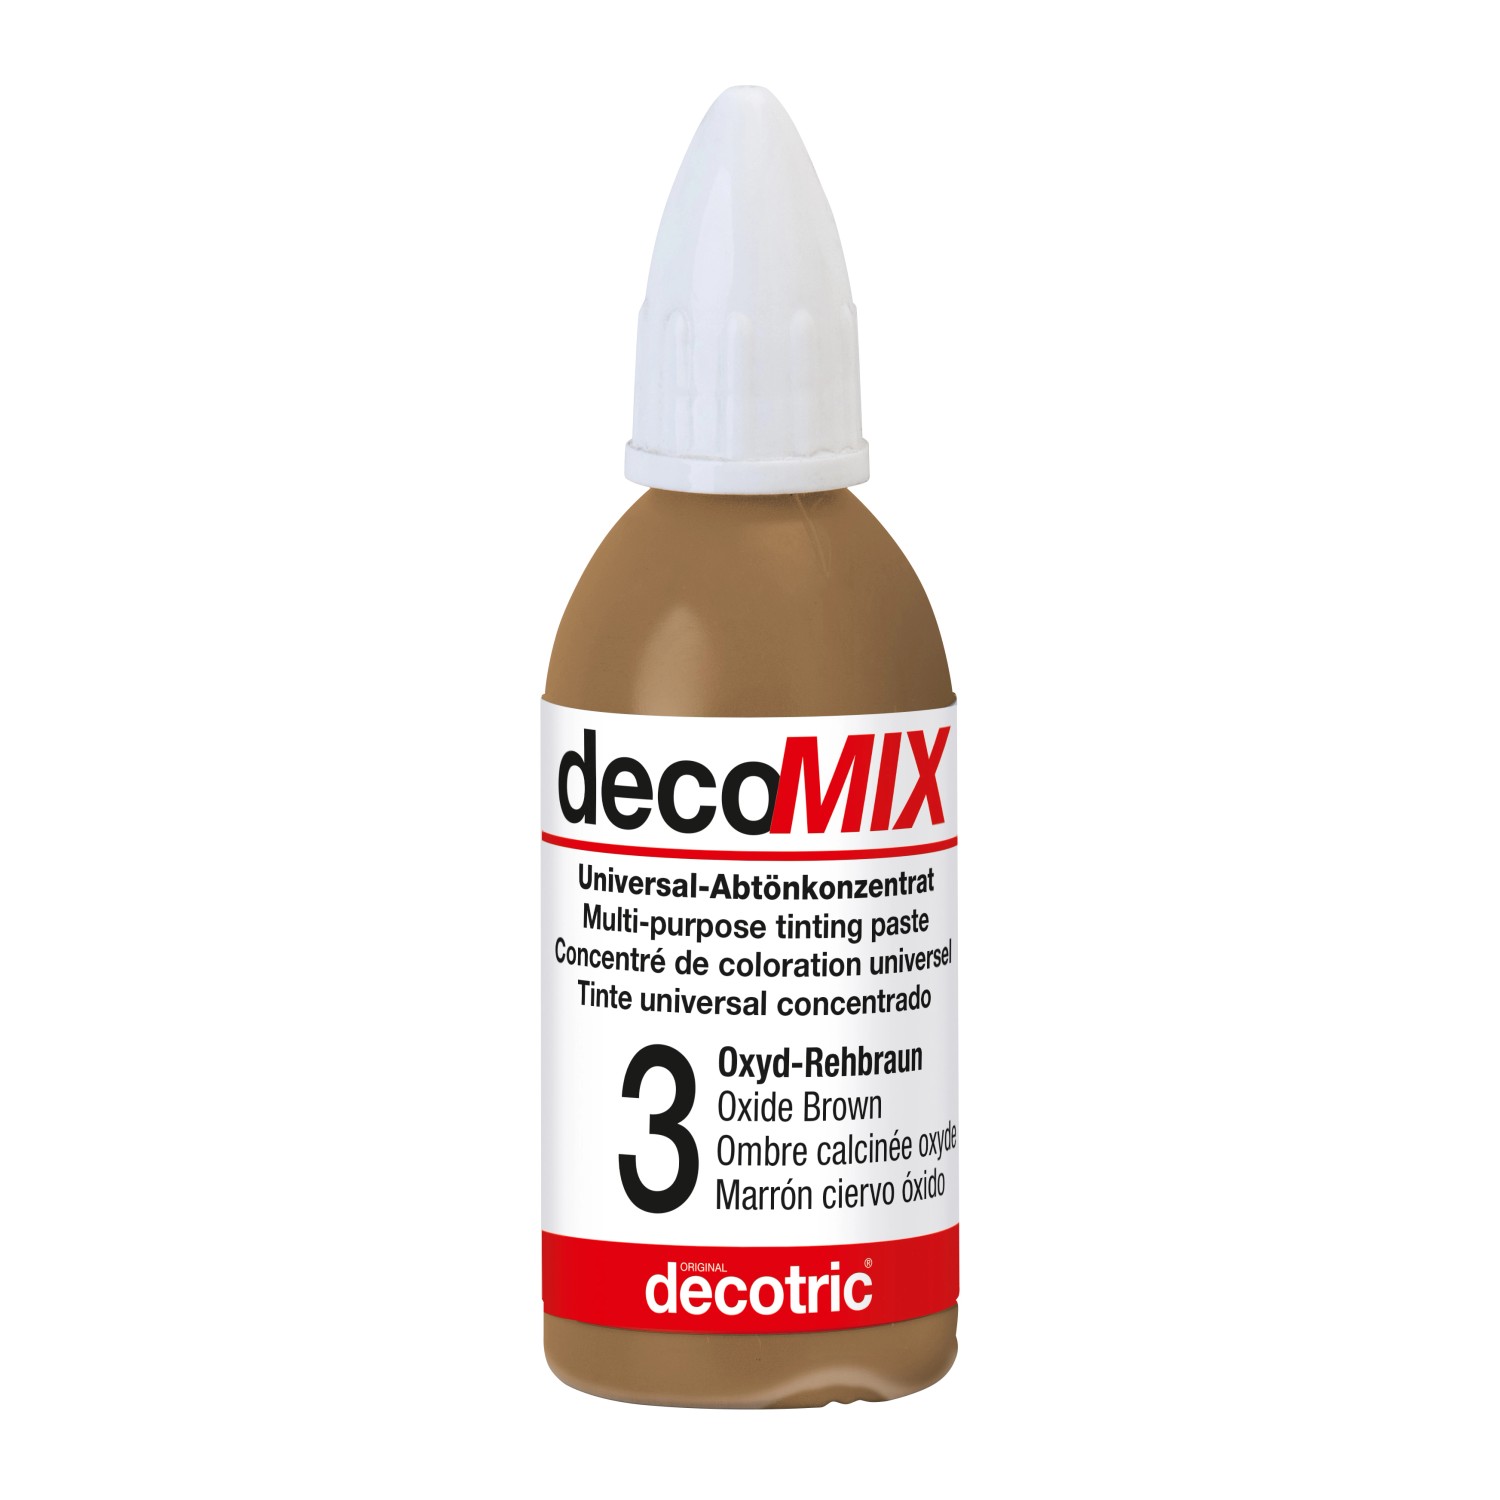 Decomix Universal-Abtönkonzentrat Oxyd-Rehbraun 20 ml